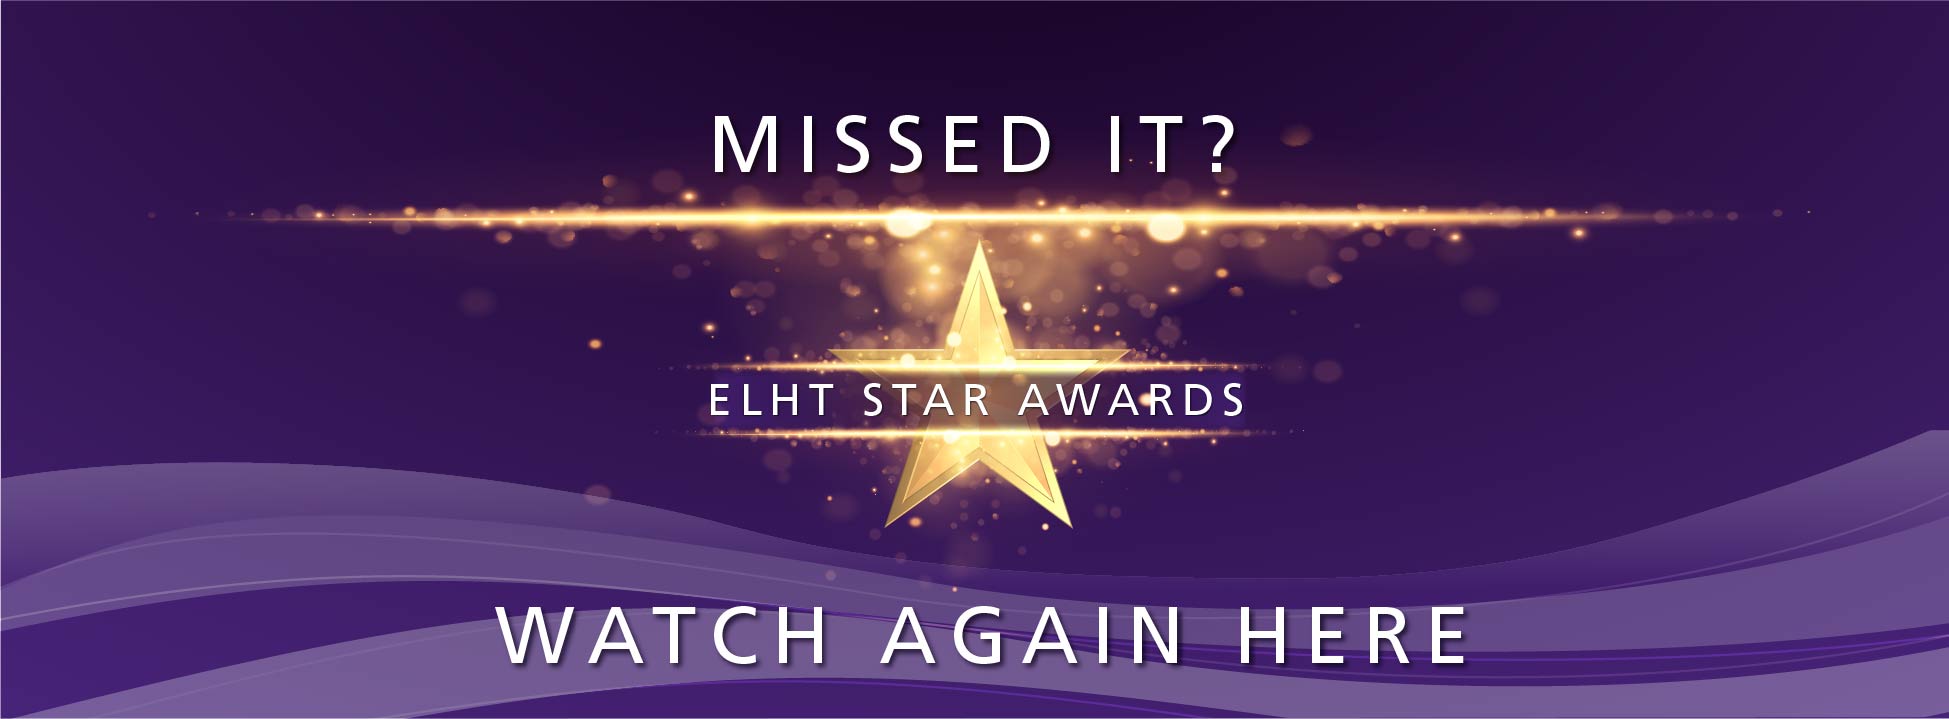 ELHT STAR Awards - Watch again